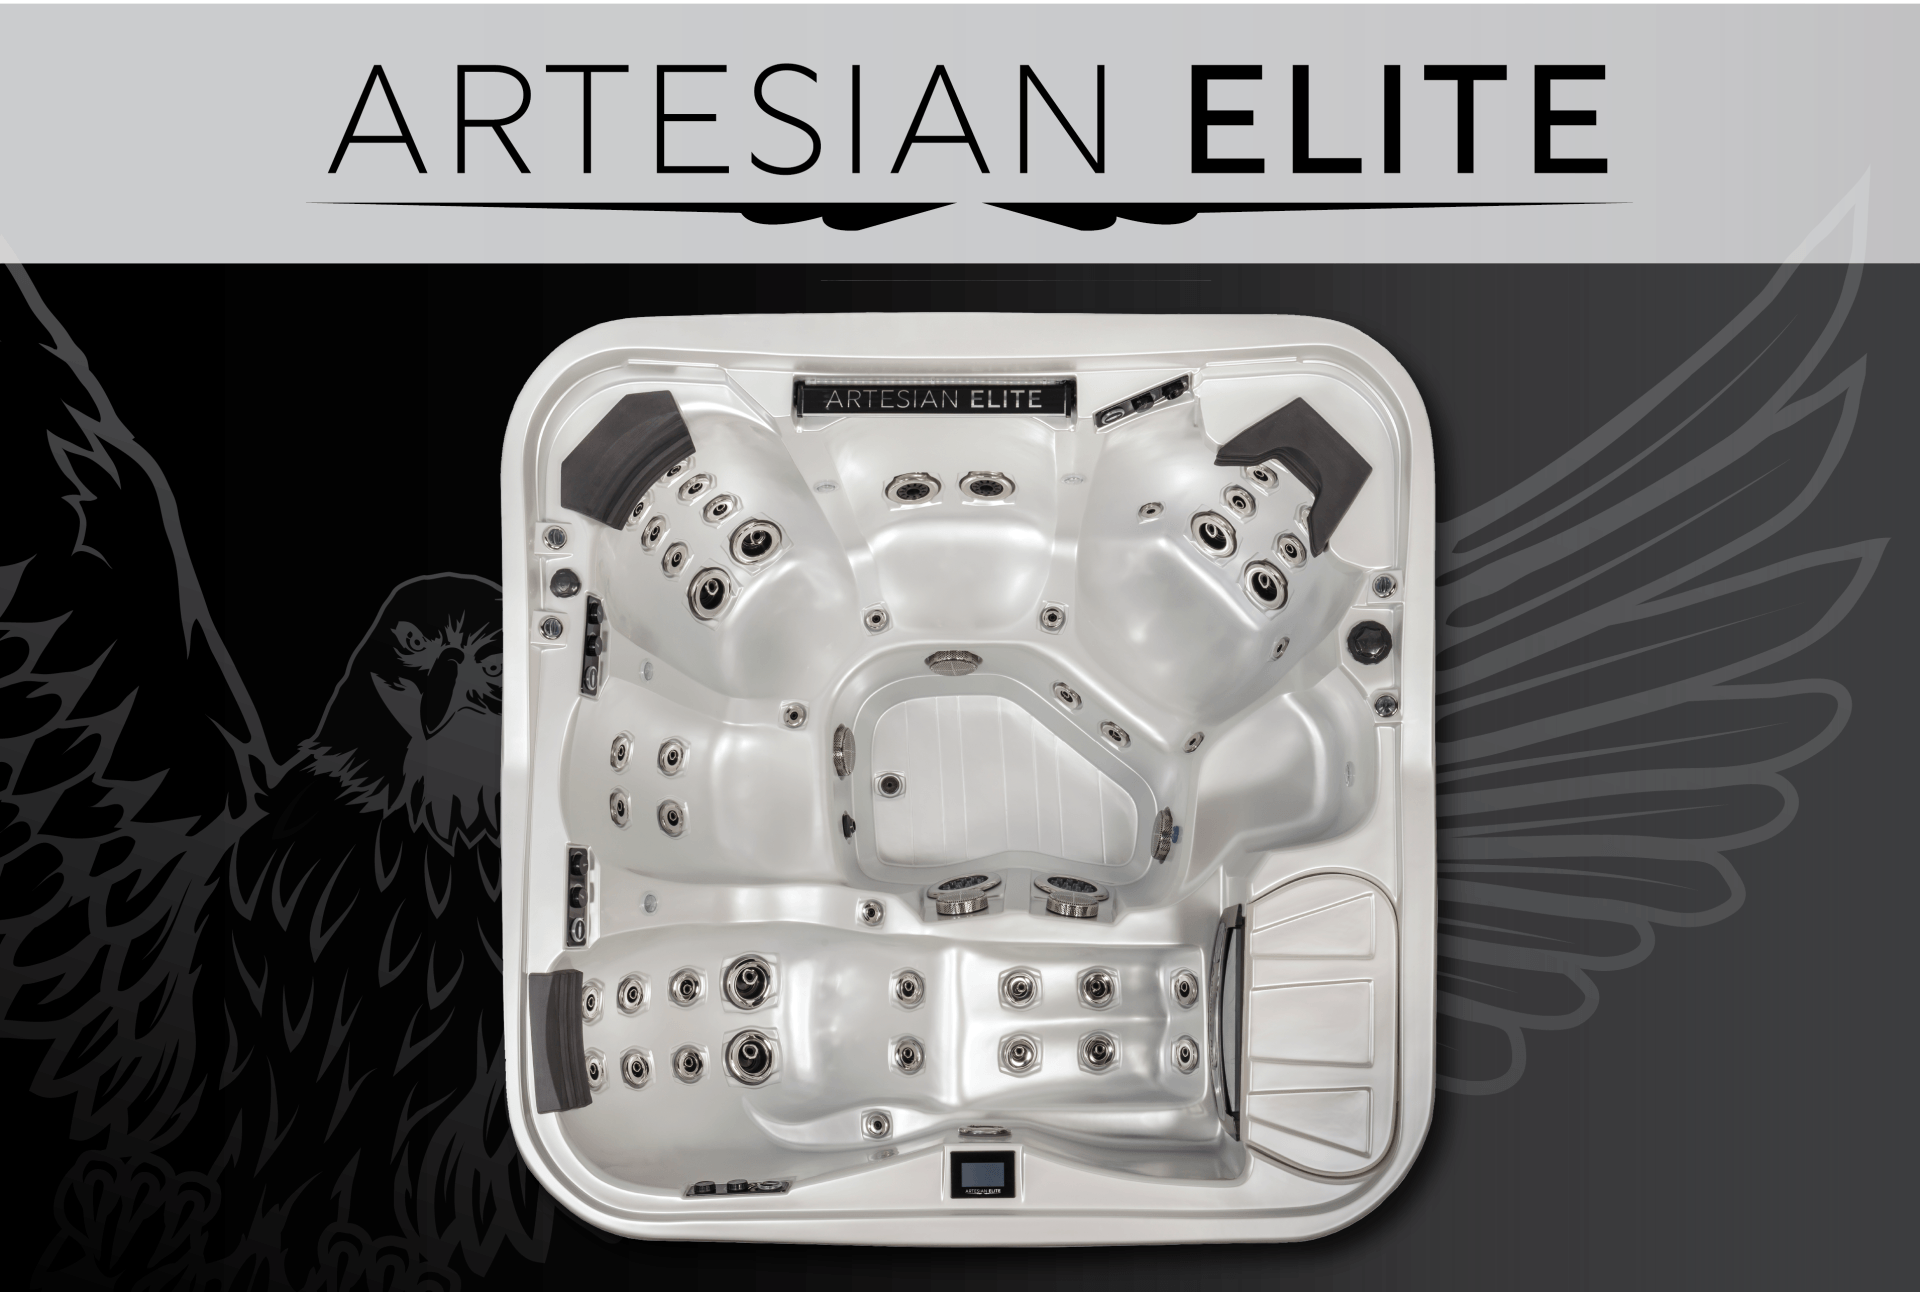 Artesian Elite best hot tubs by Hot tub haven